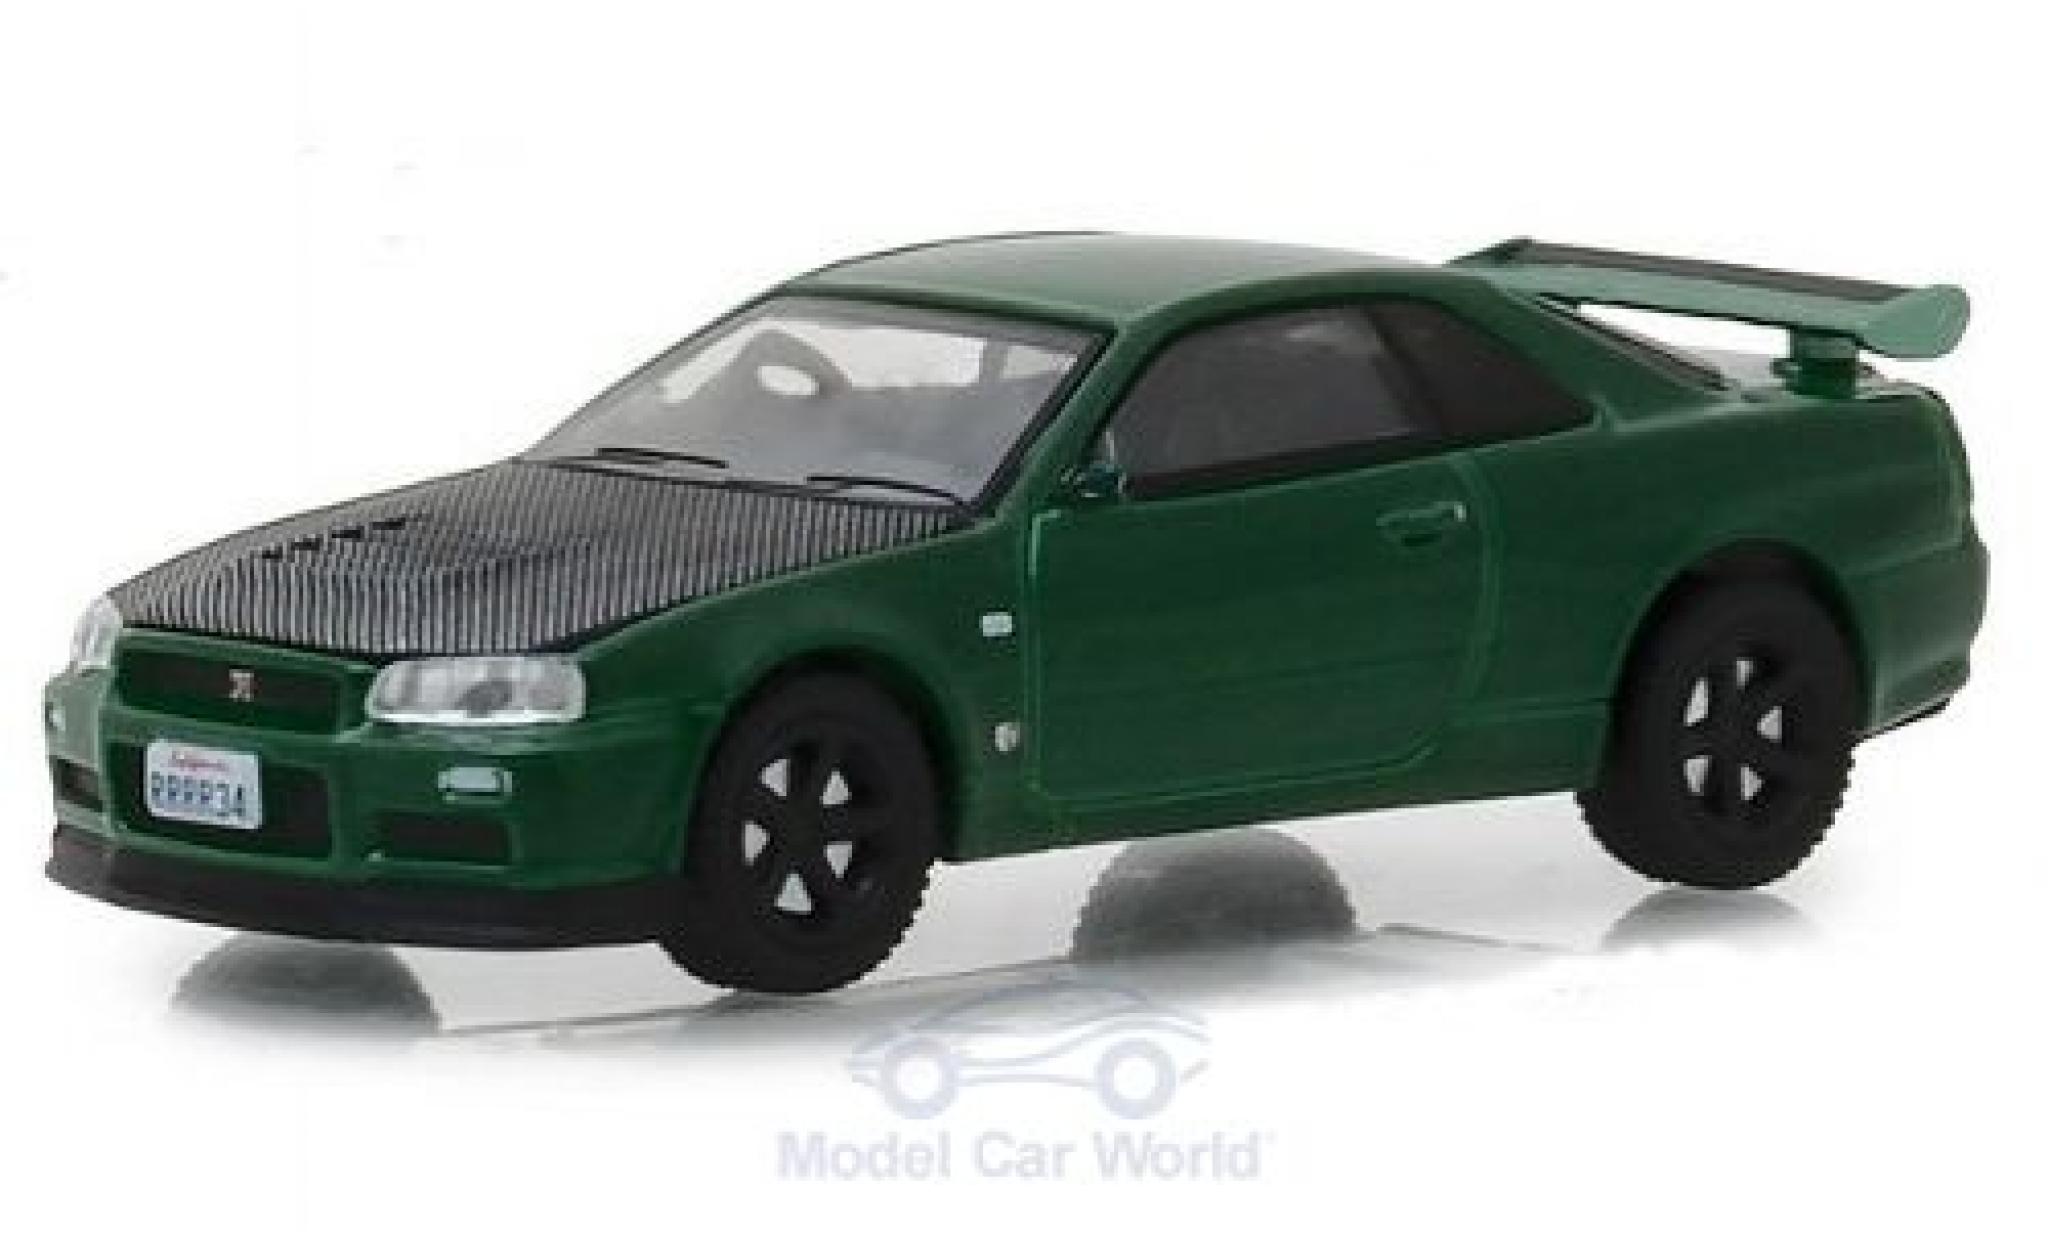 Modellino In Miniatura Nissan Skyline 164 Greenlight Gt R Bnr34 Metallic Dunkelverde 2000 